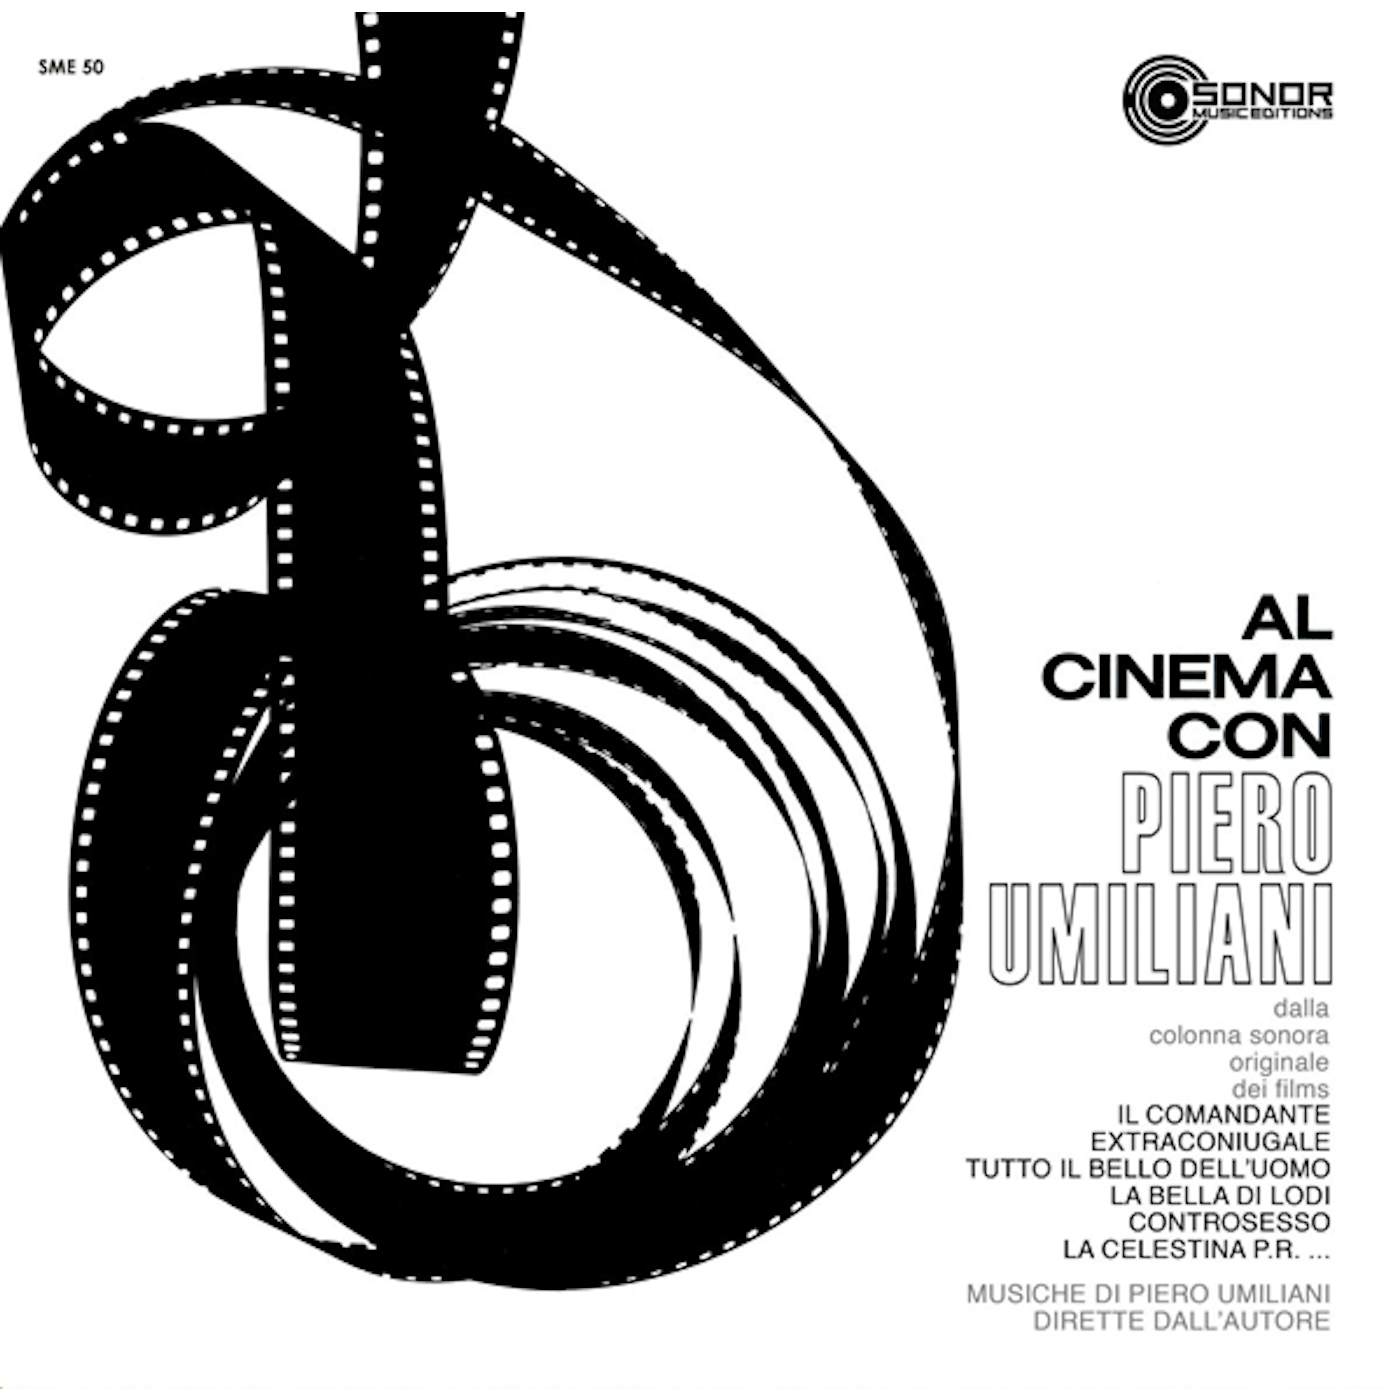 AL CINEMA CON PIERO UMILIANI Vinyl Record